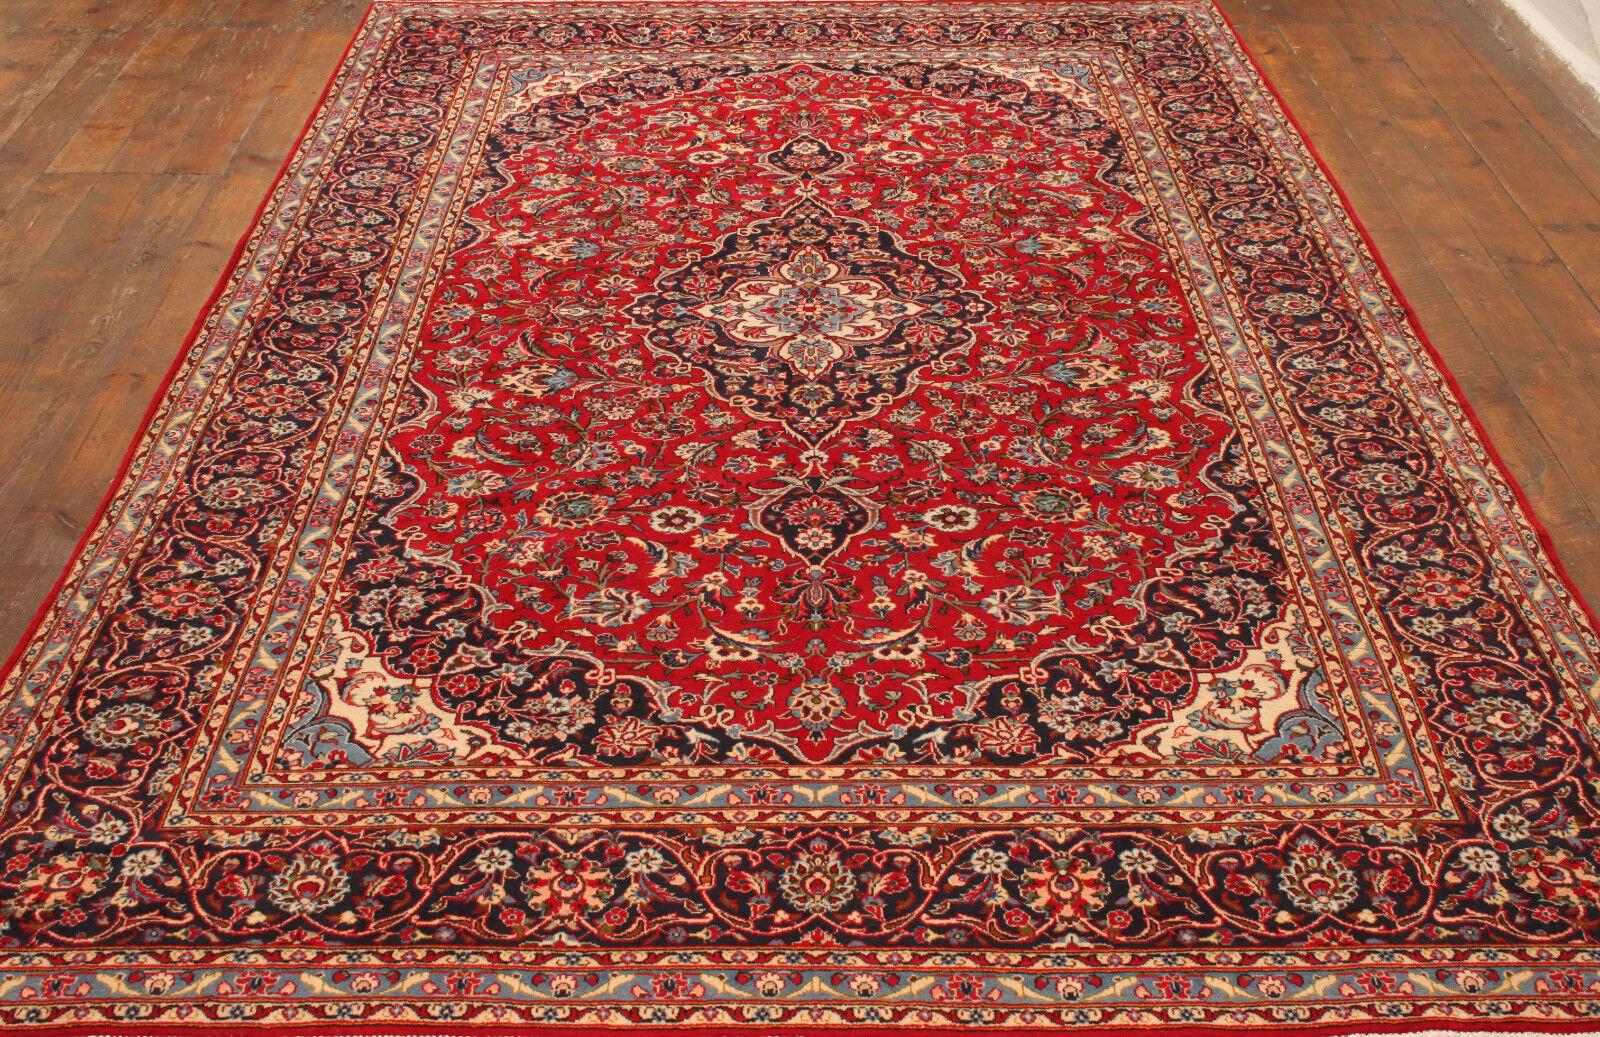 Wool Handmade Vintage Persian Style Kashan Rug 7.8' x 12.3', 1980s - 1T03 For Sale